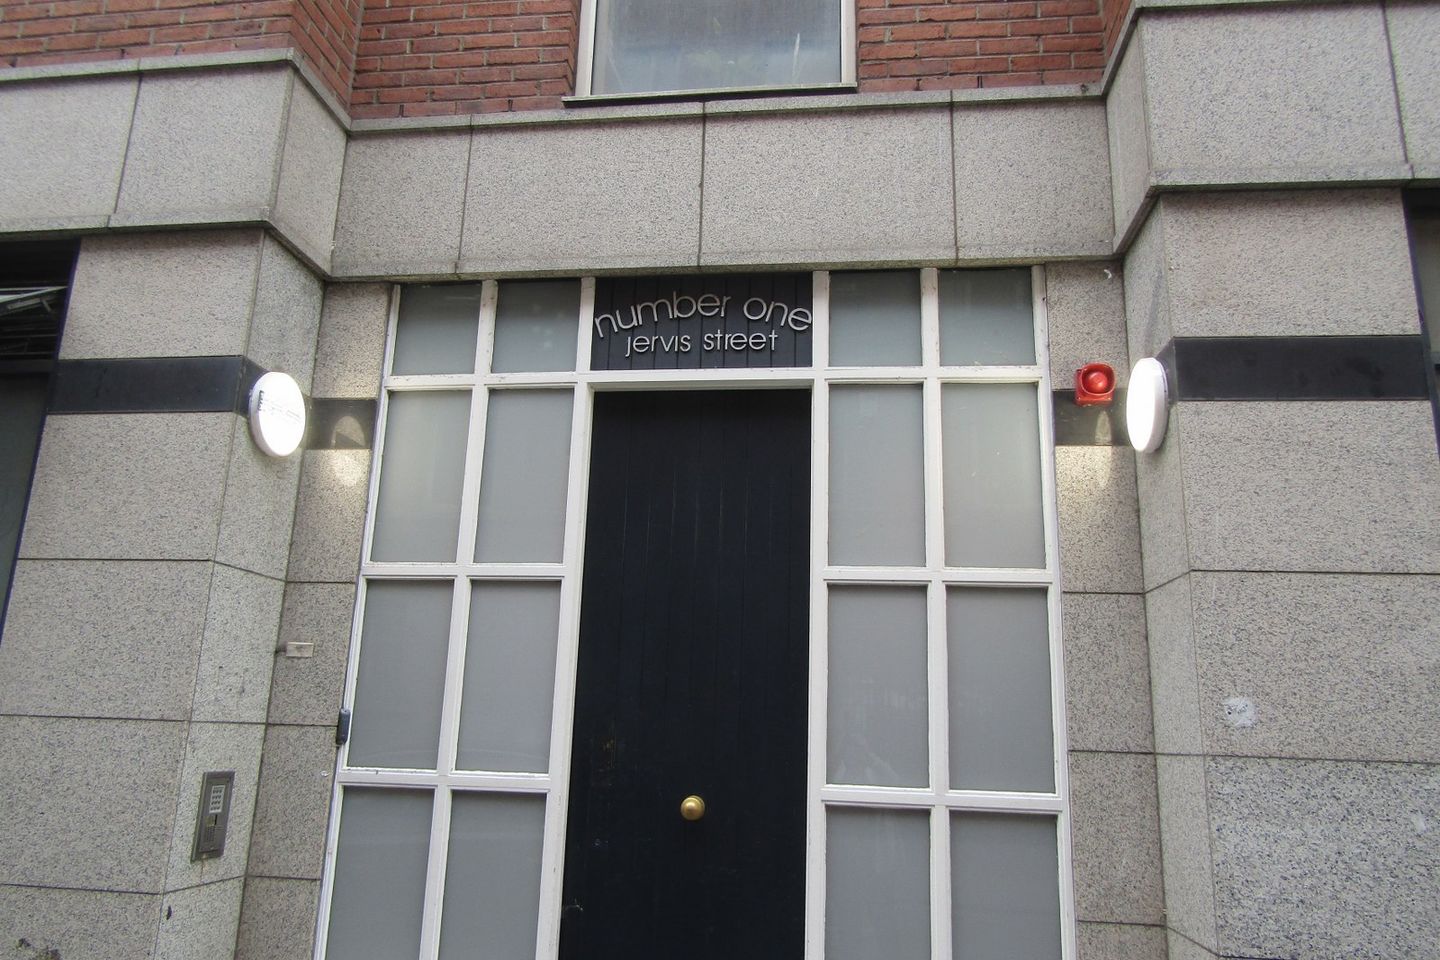 Apartment 43, 1 Jervis Street, Dublin 1, D01FP68